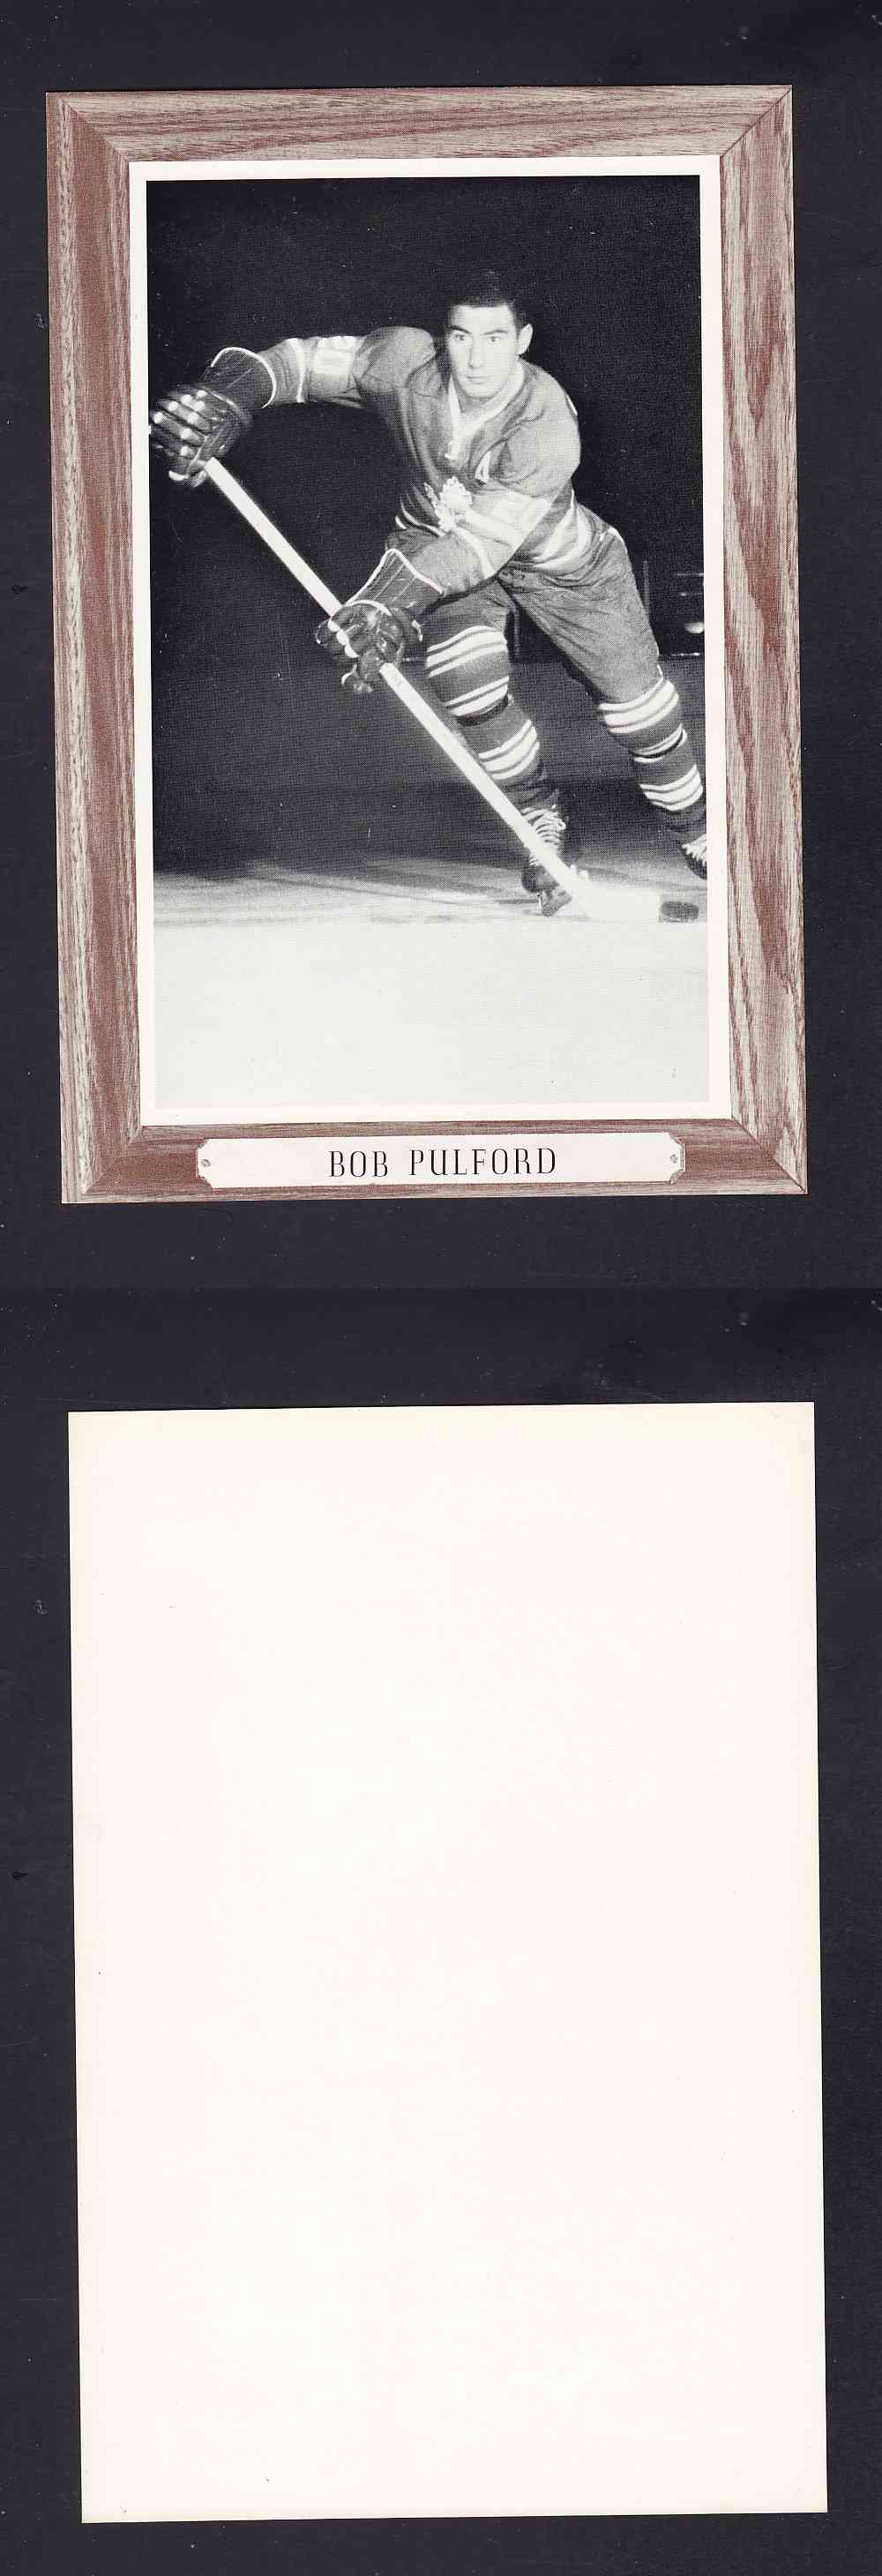 1964-67 BEEHIVE PHOTO GR.3 B. PULFORD V.2 *SP* photo